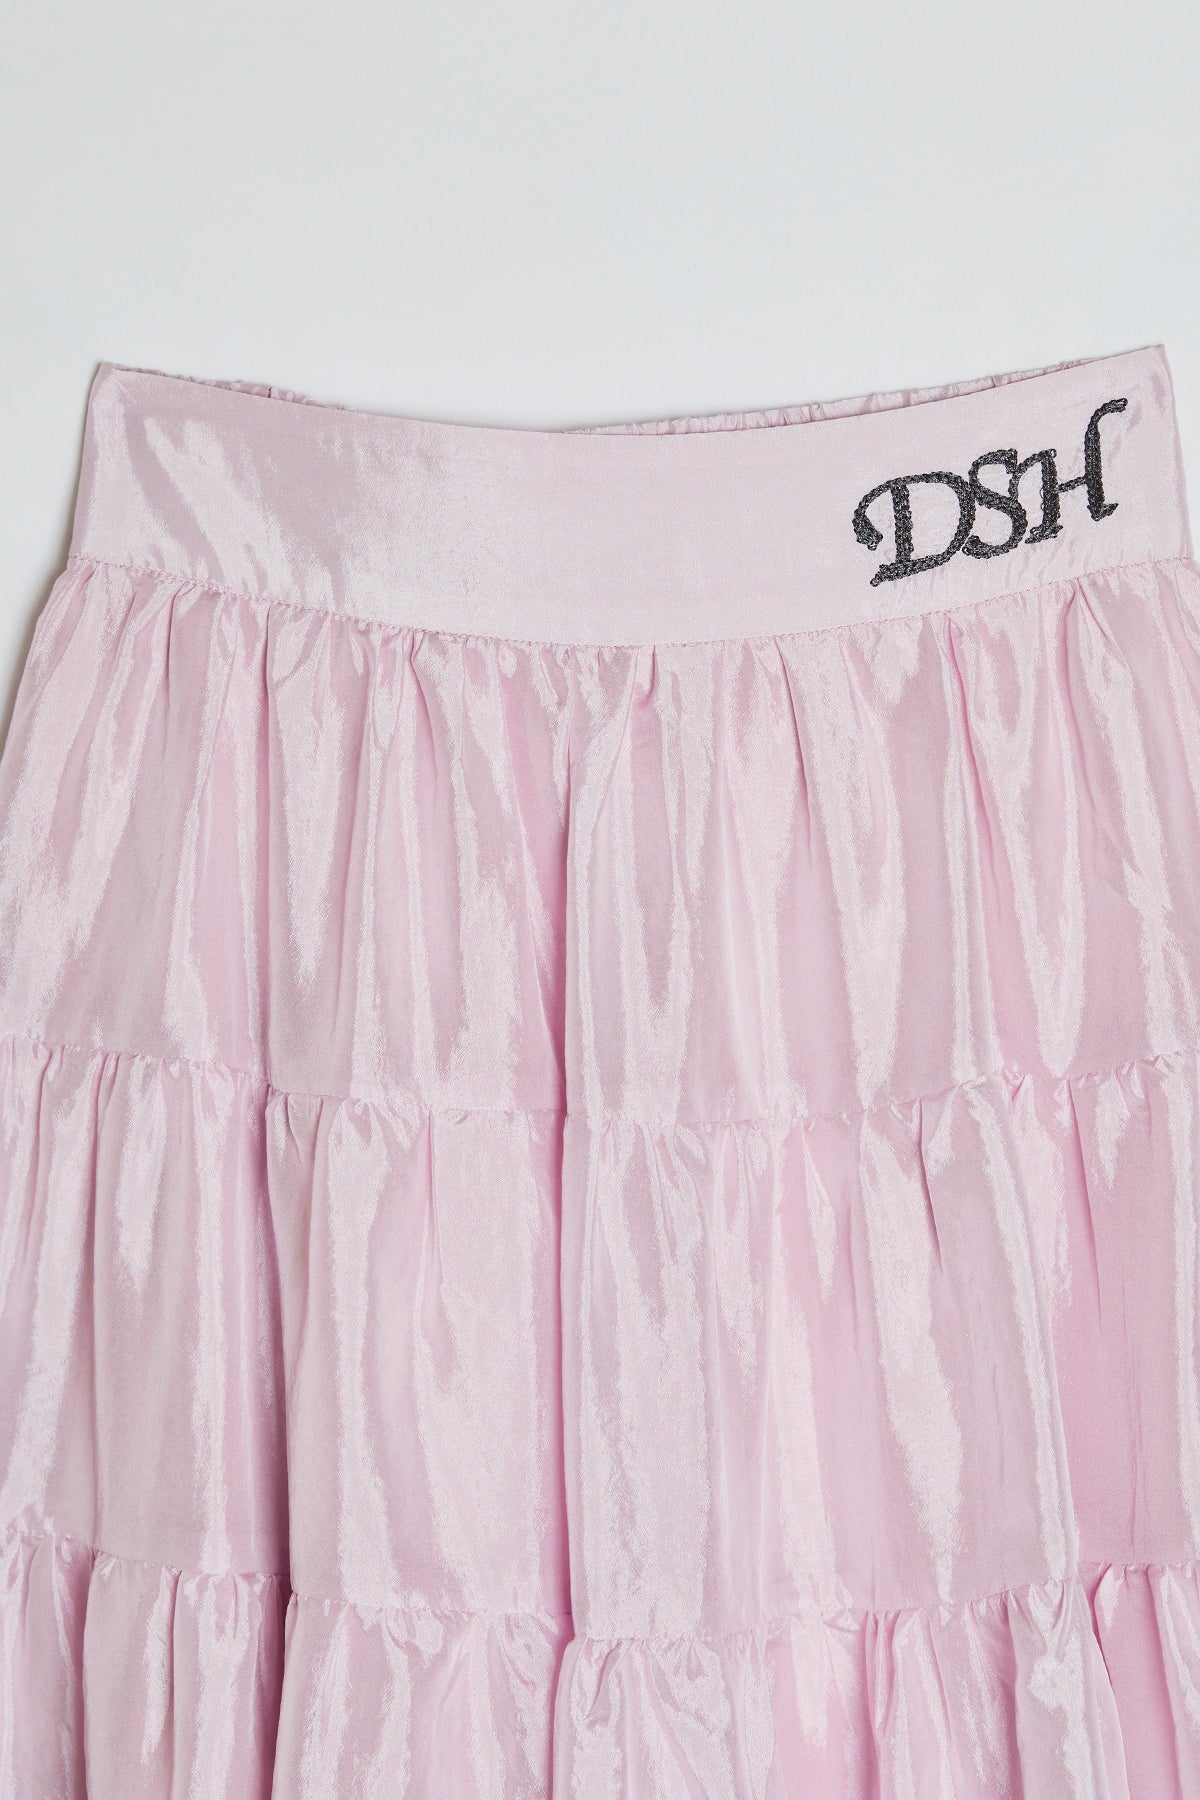 Sherbet Frill Skirt / Pink